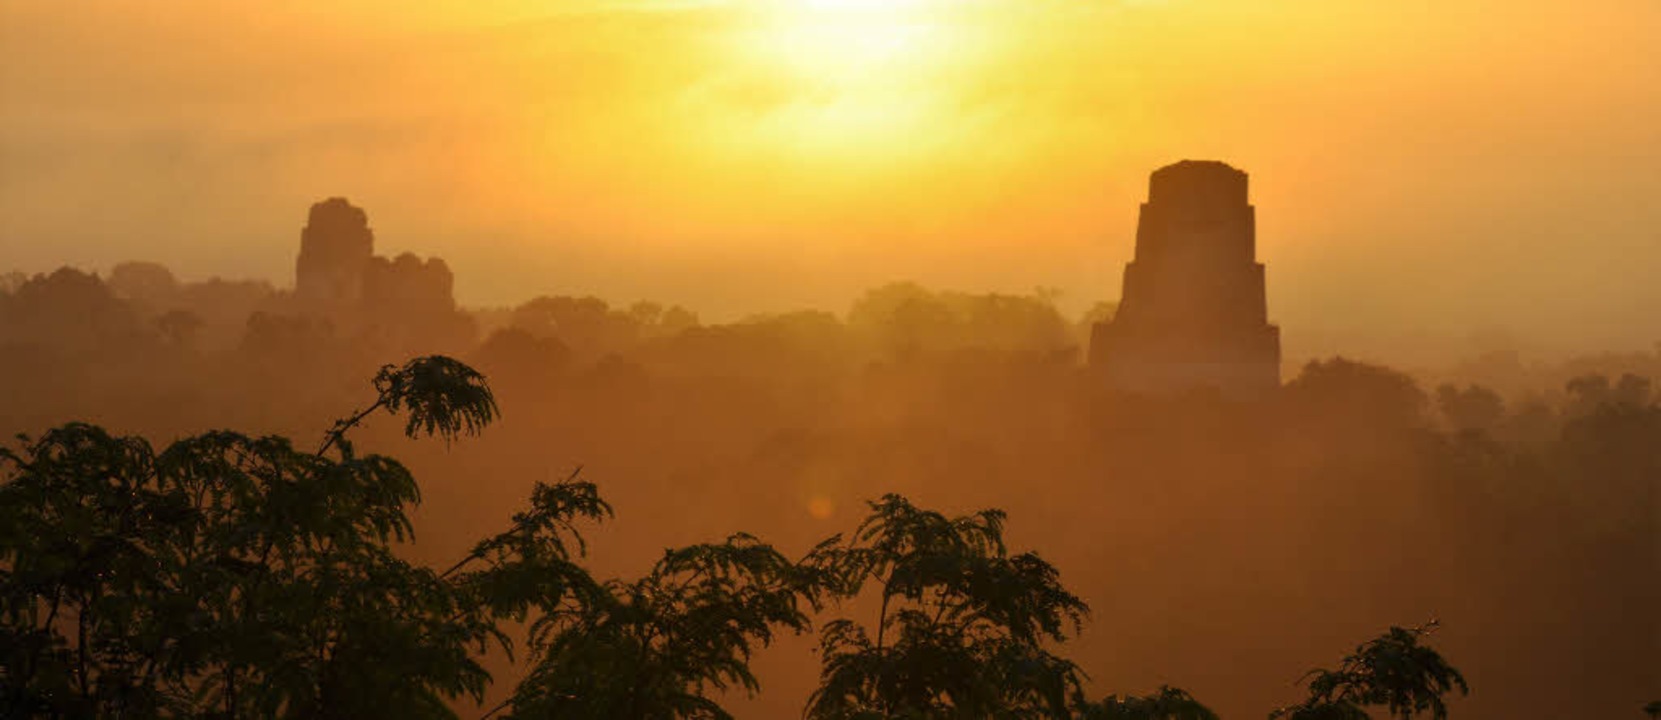 Sonnenaufgang über Tikal: Die antike S...ultur  schon freigelegt sind (rechts).  | Foto: Diego Cardini(Fotolia.com)